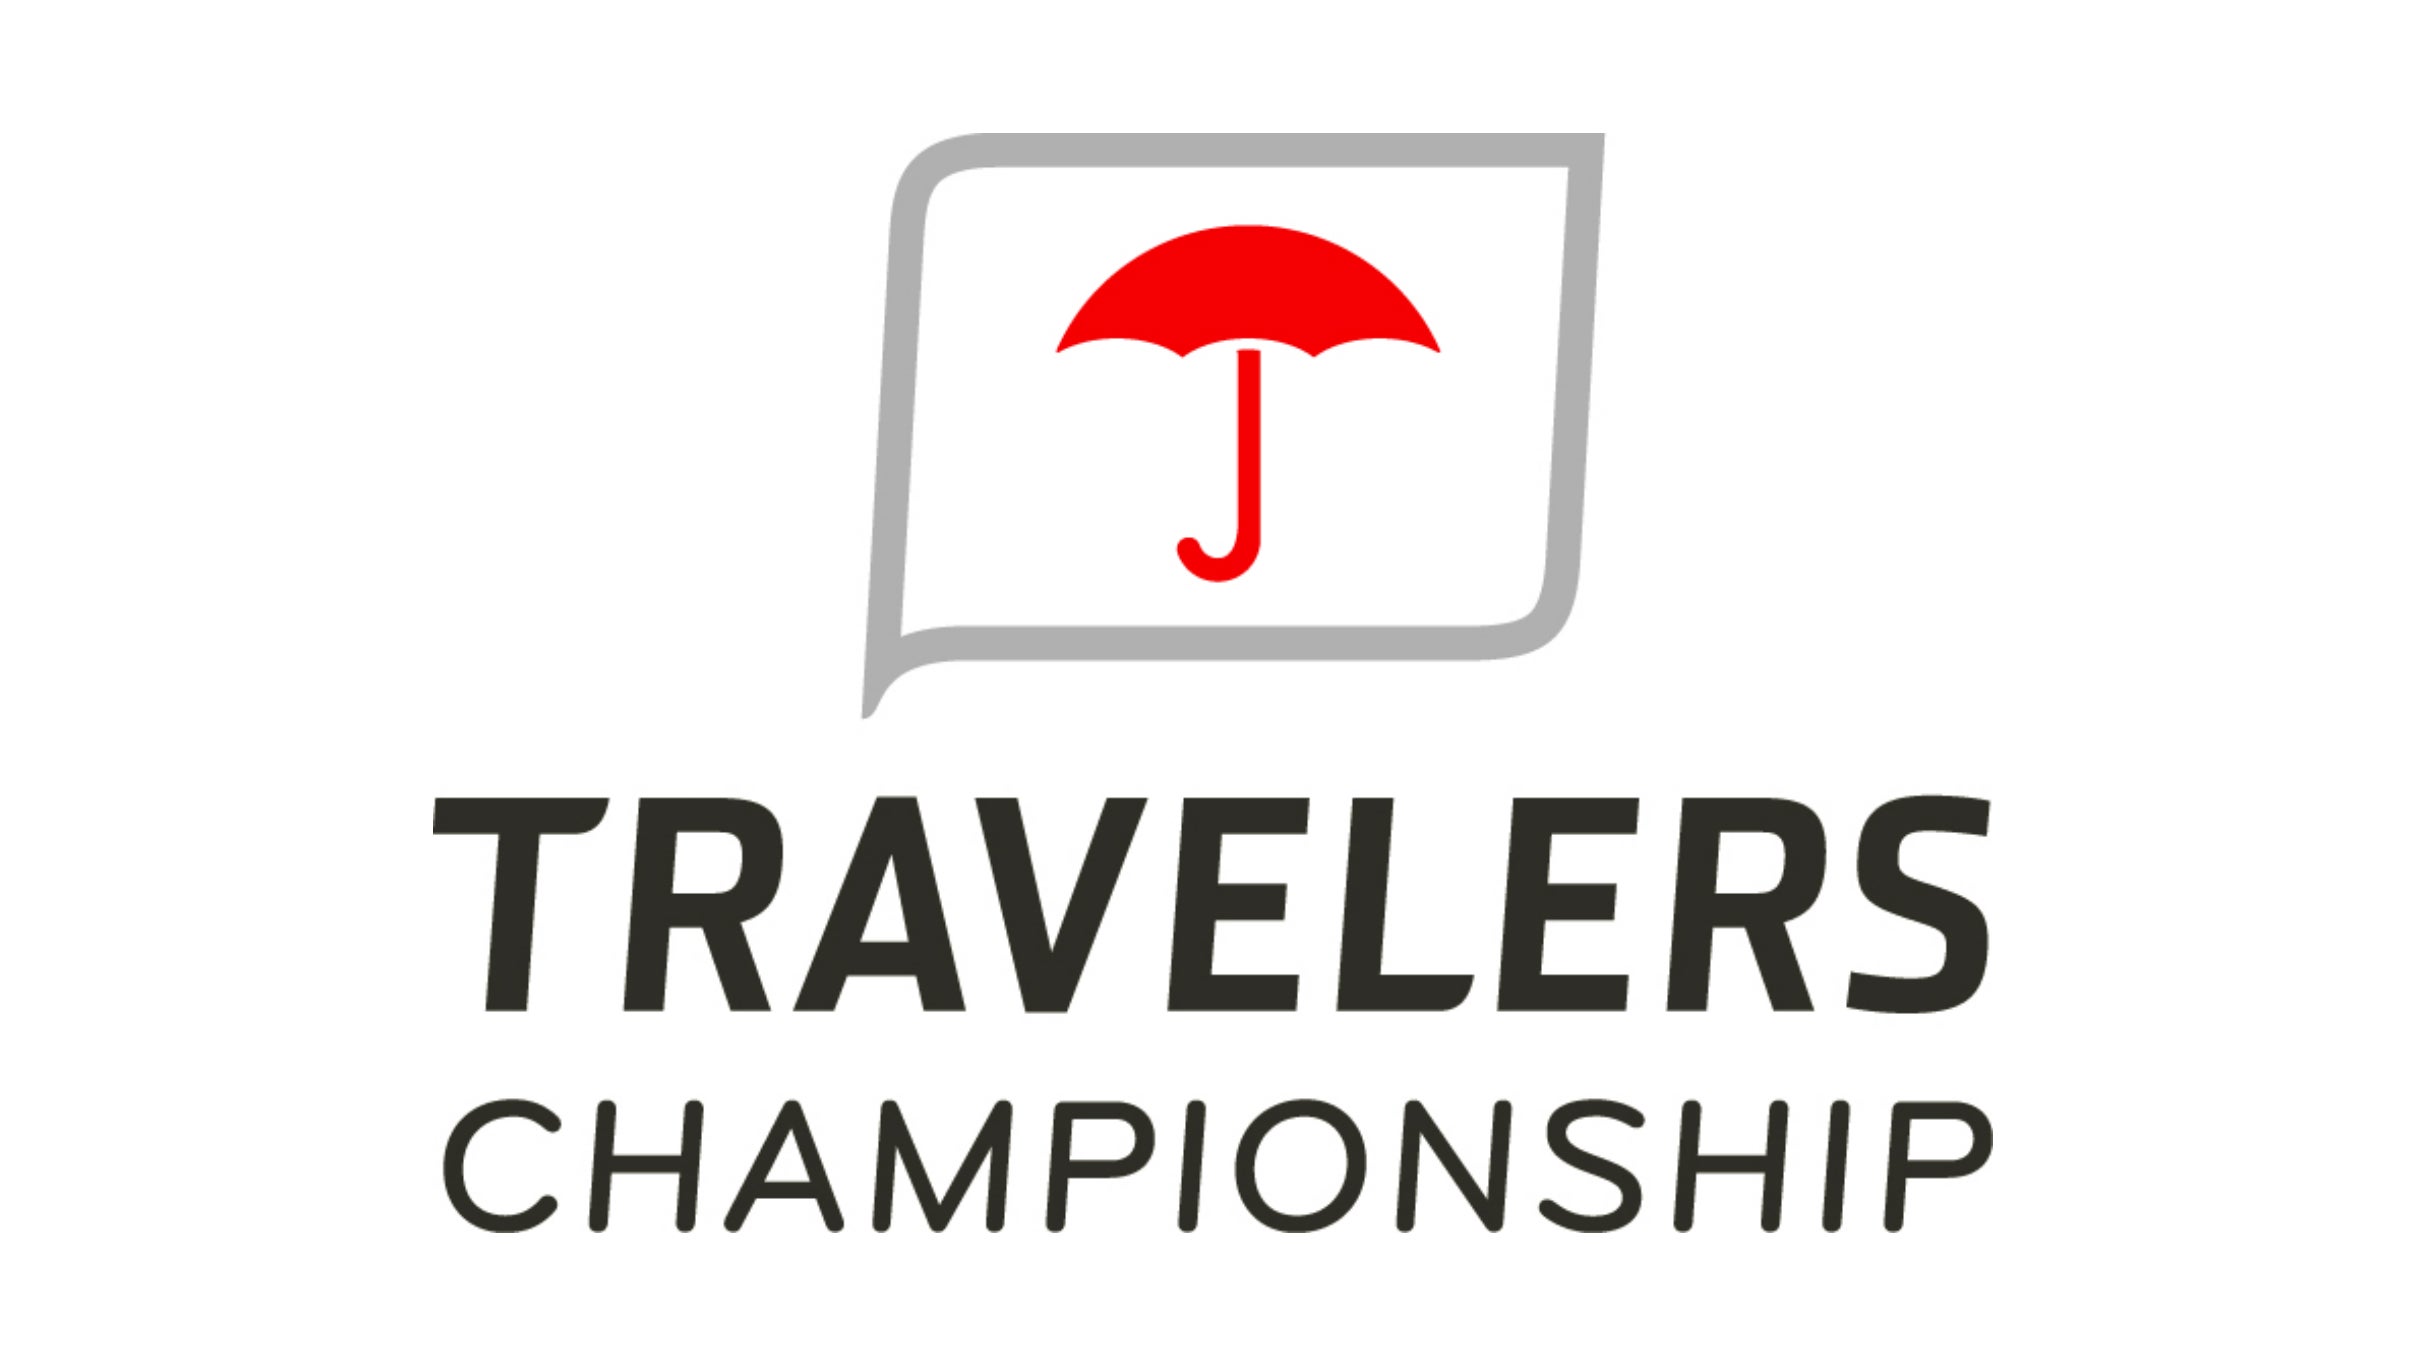 Travelers Championship Thursday at TPC River Highlands